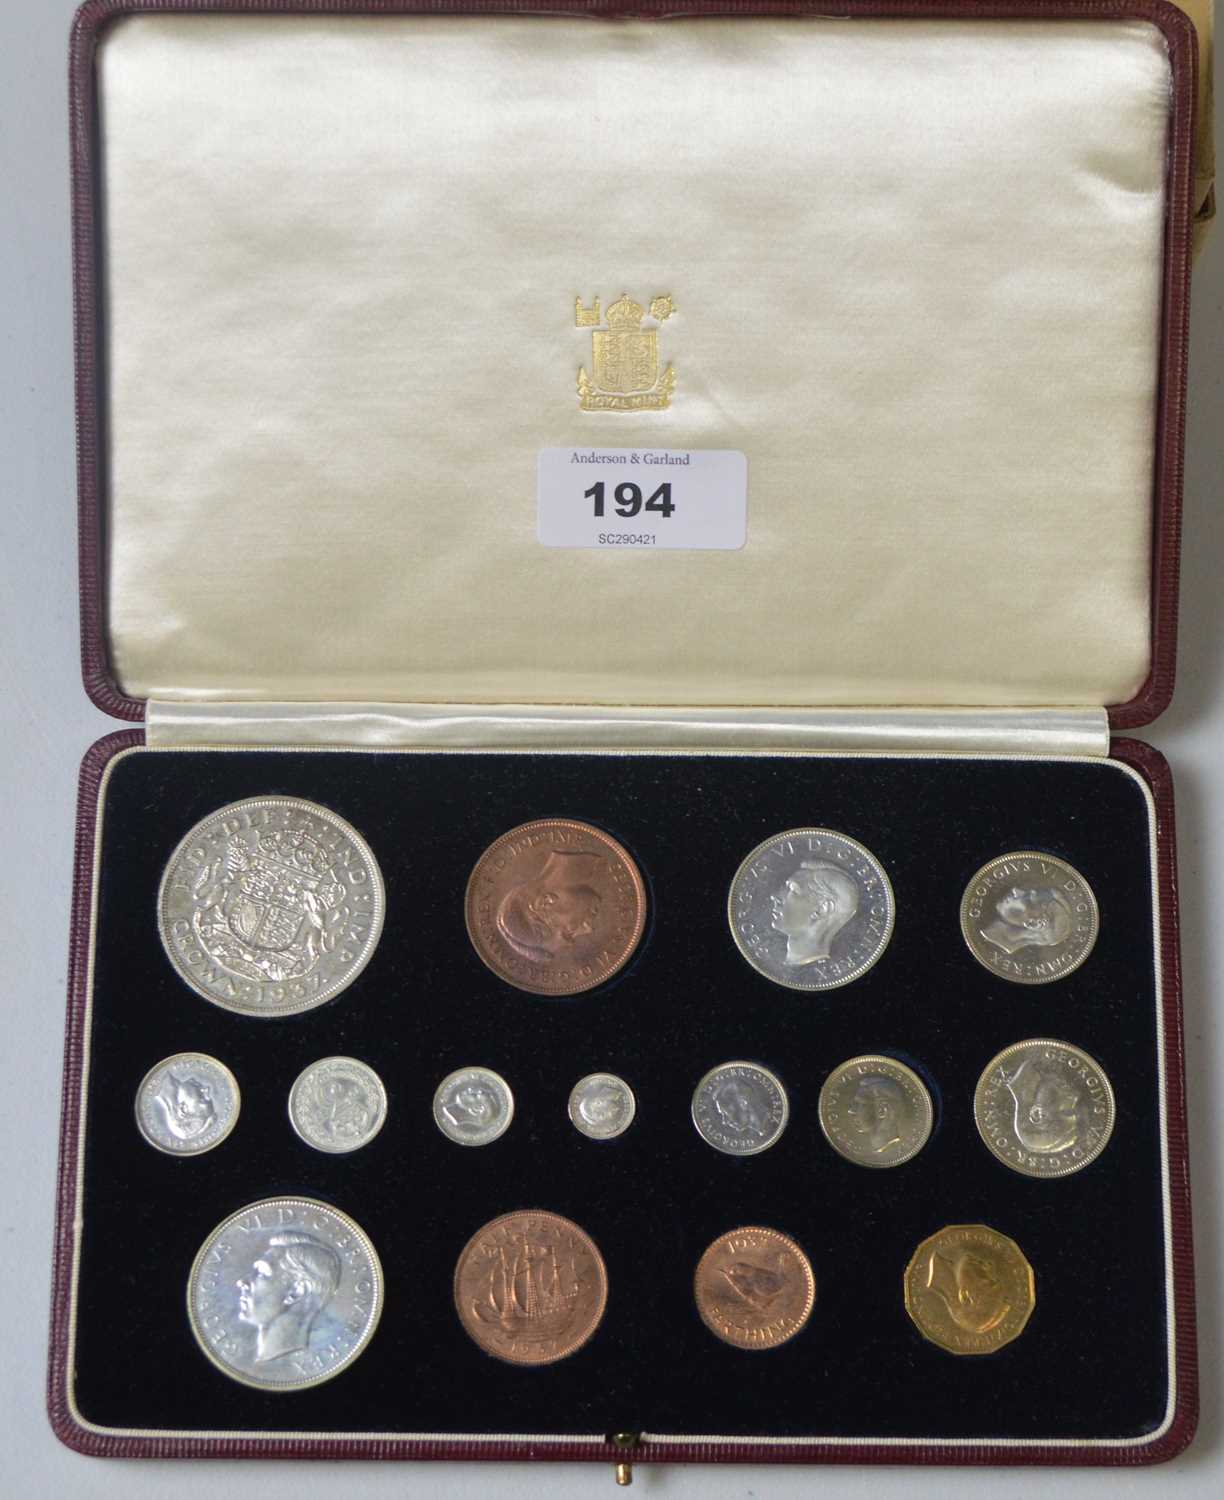 Lot 194 - 1937 George VI specimen coin set